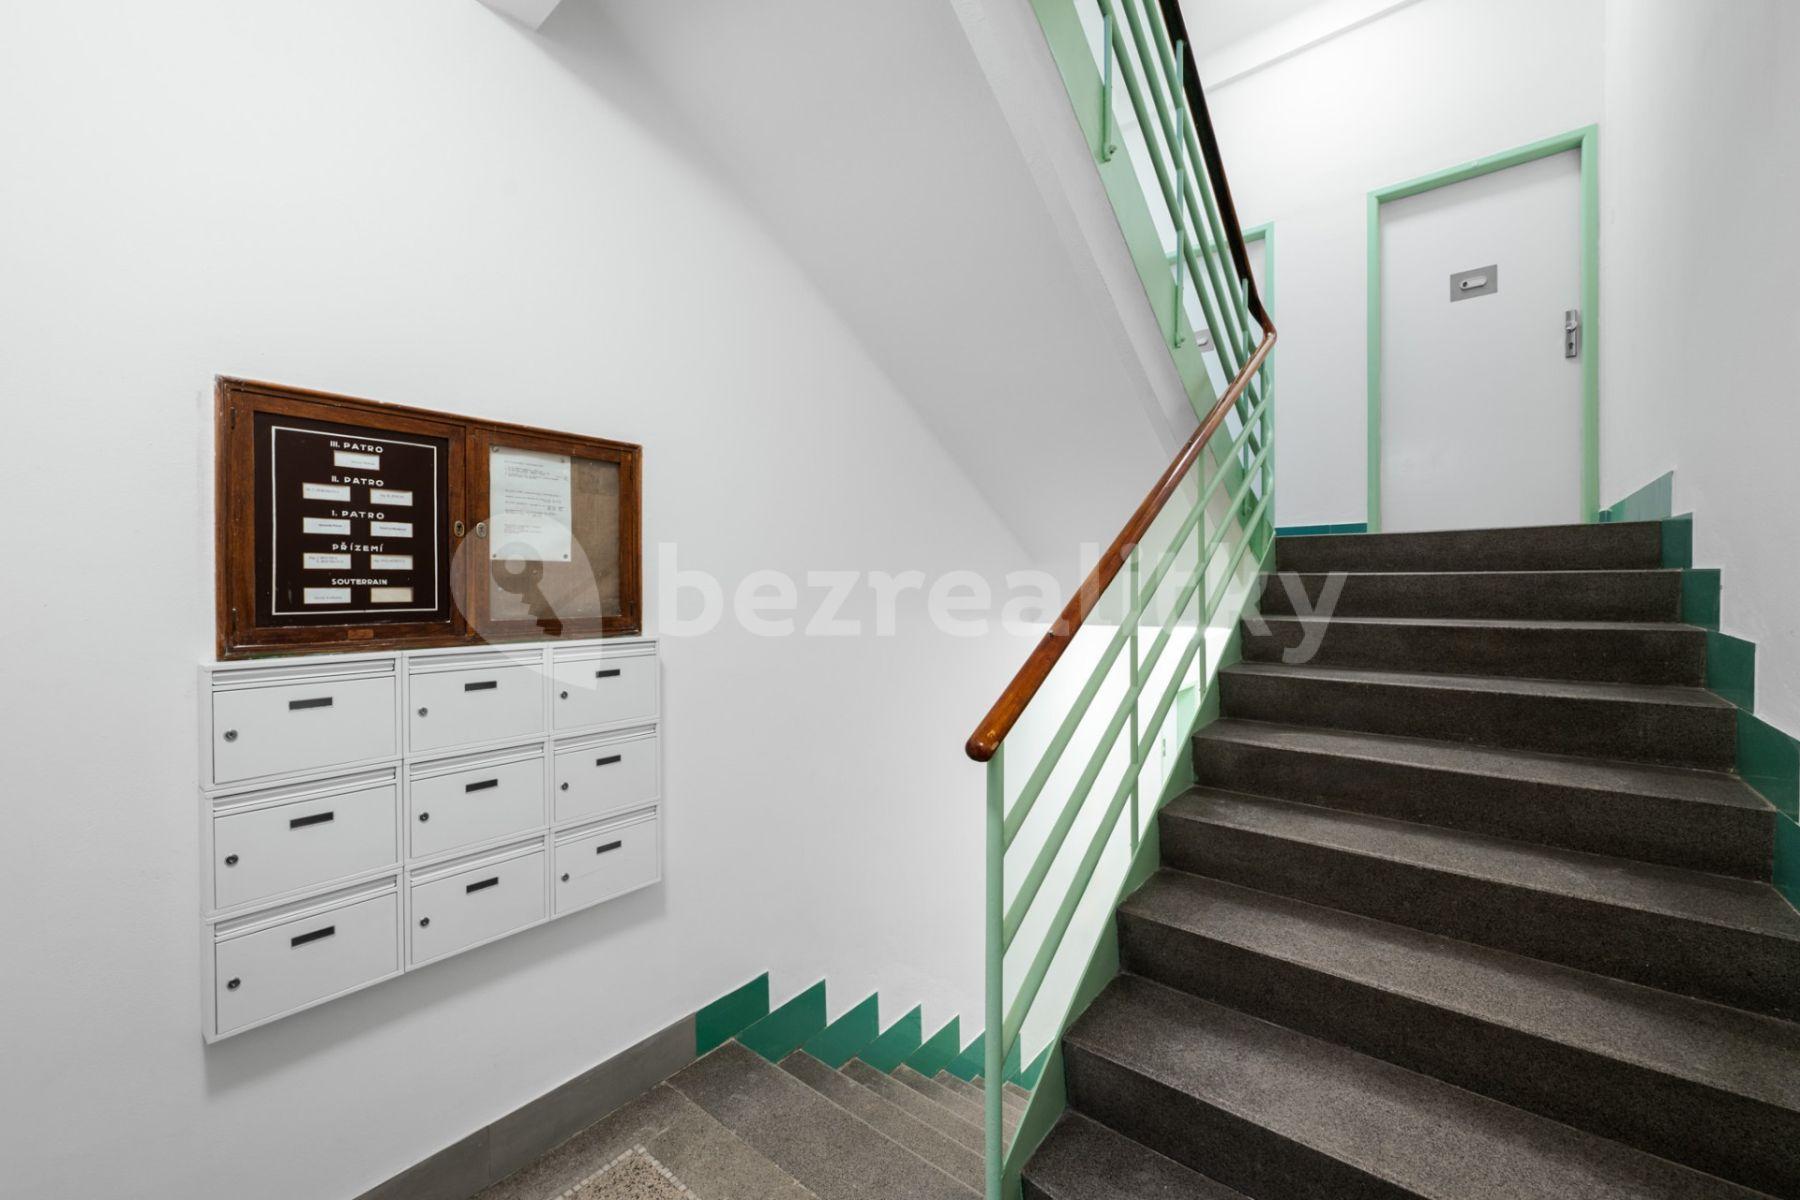 2 bedroom flat for sale, 57 m², Družstevní ochoz, Prague, Prague